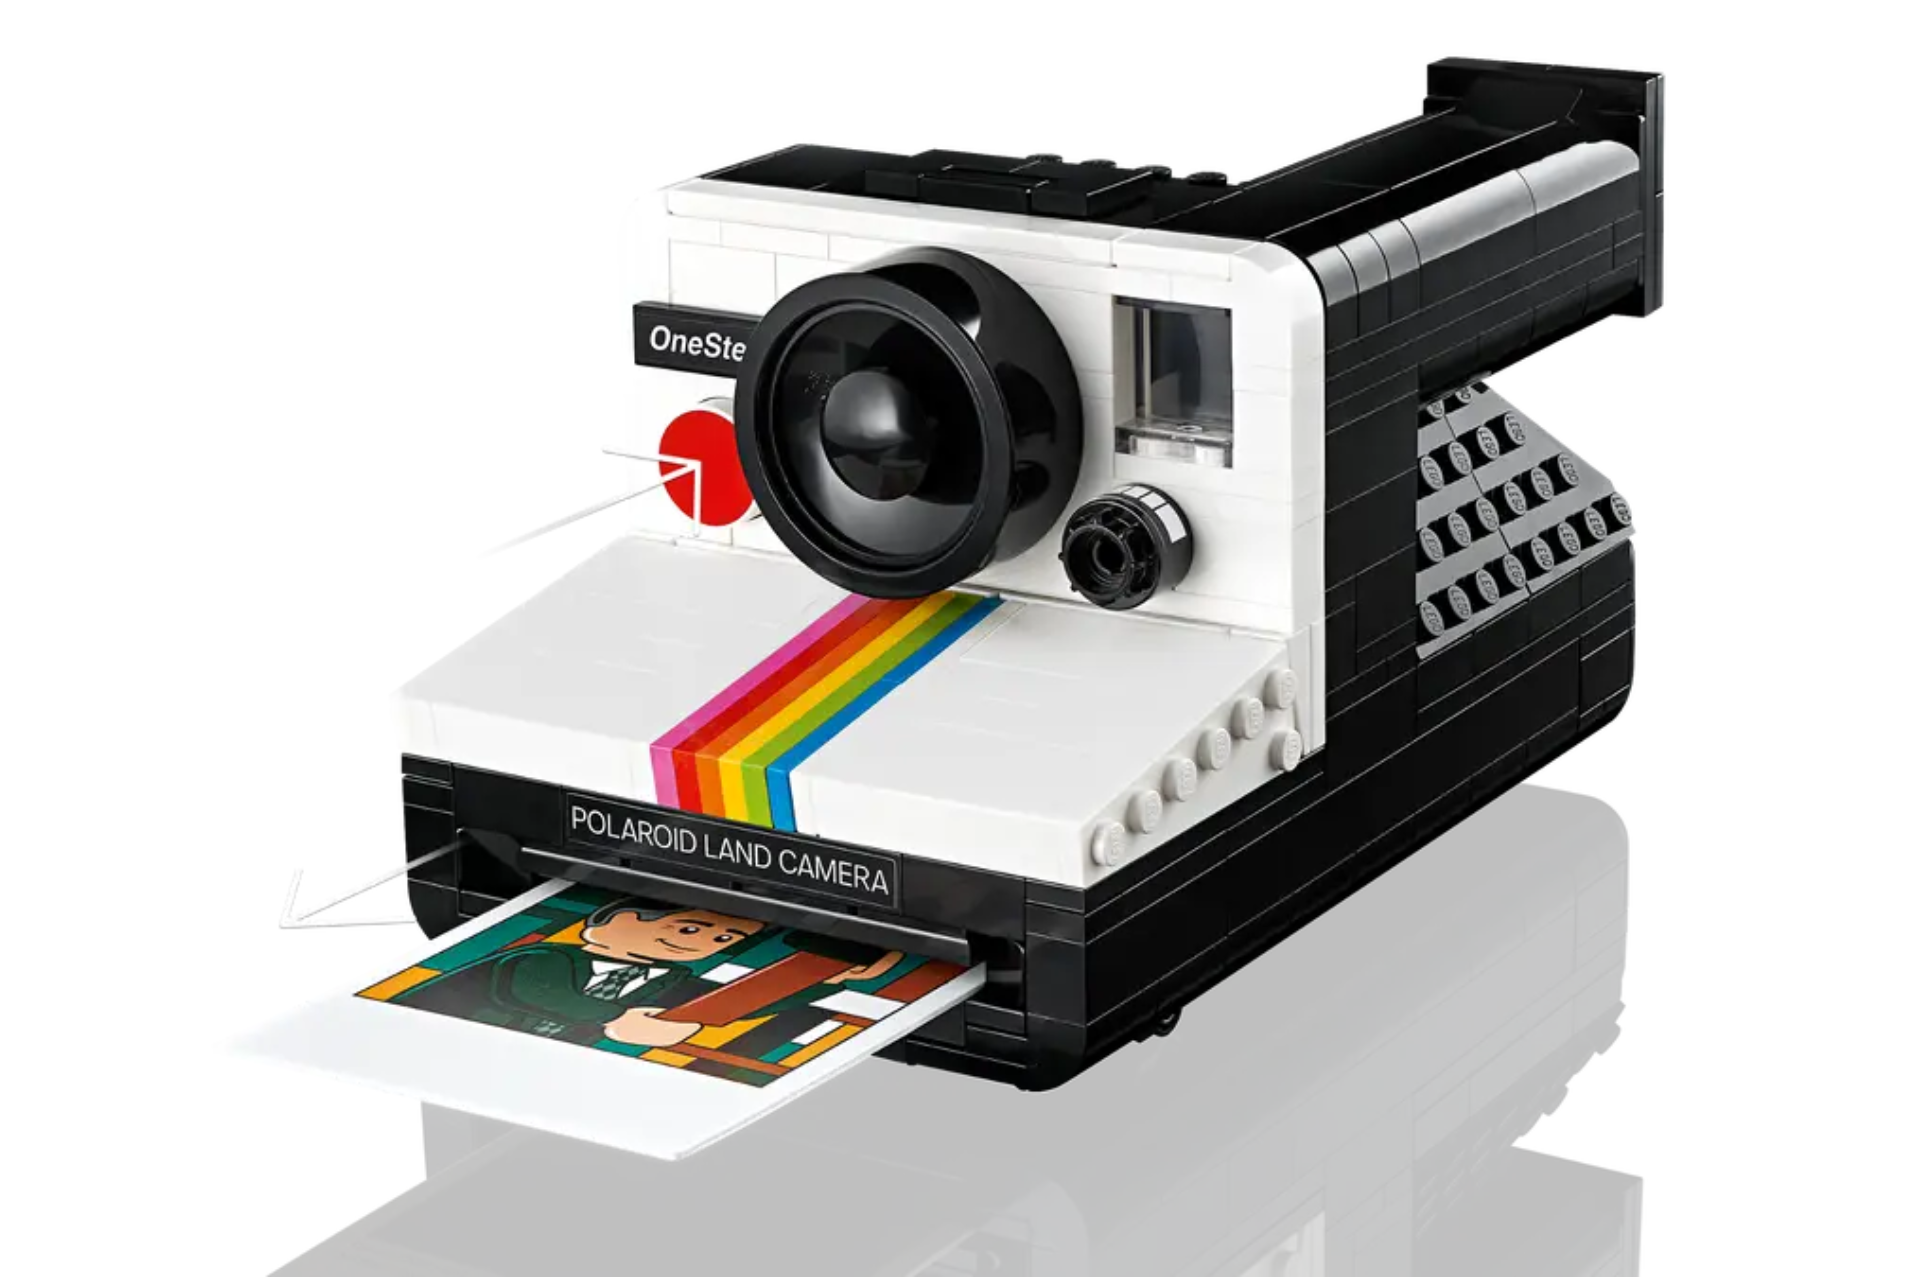 LEGO Polaroid OneStep SX-70: Un viaje de nostalgia en ladrillos